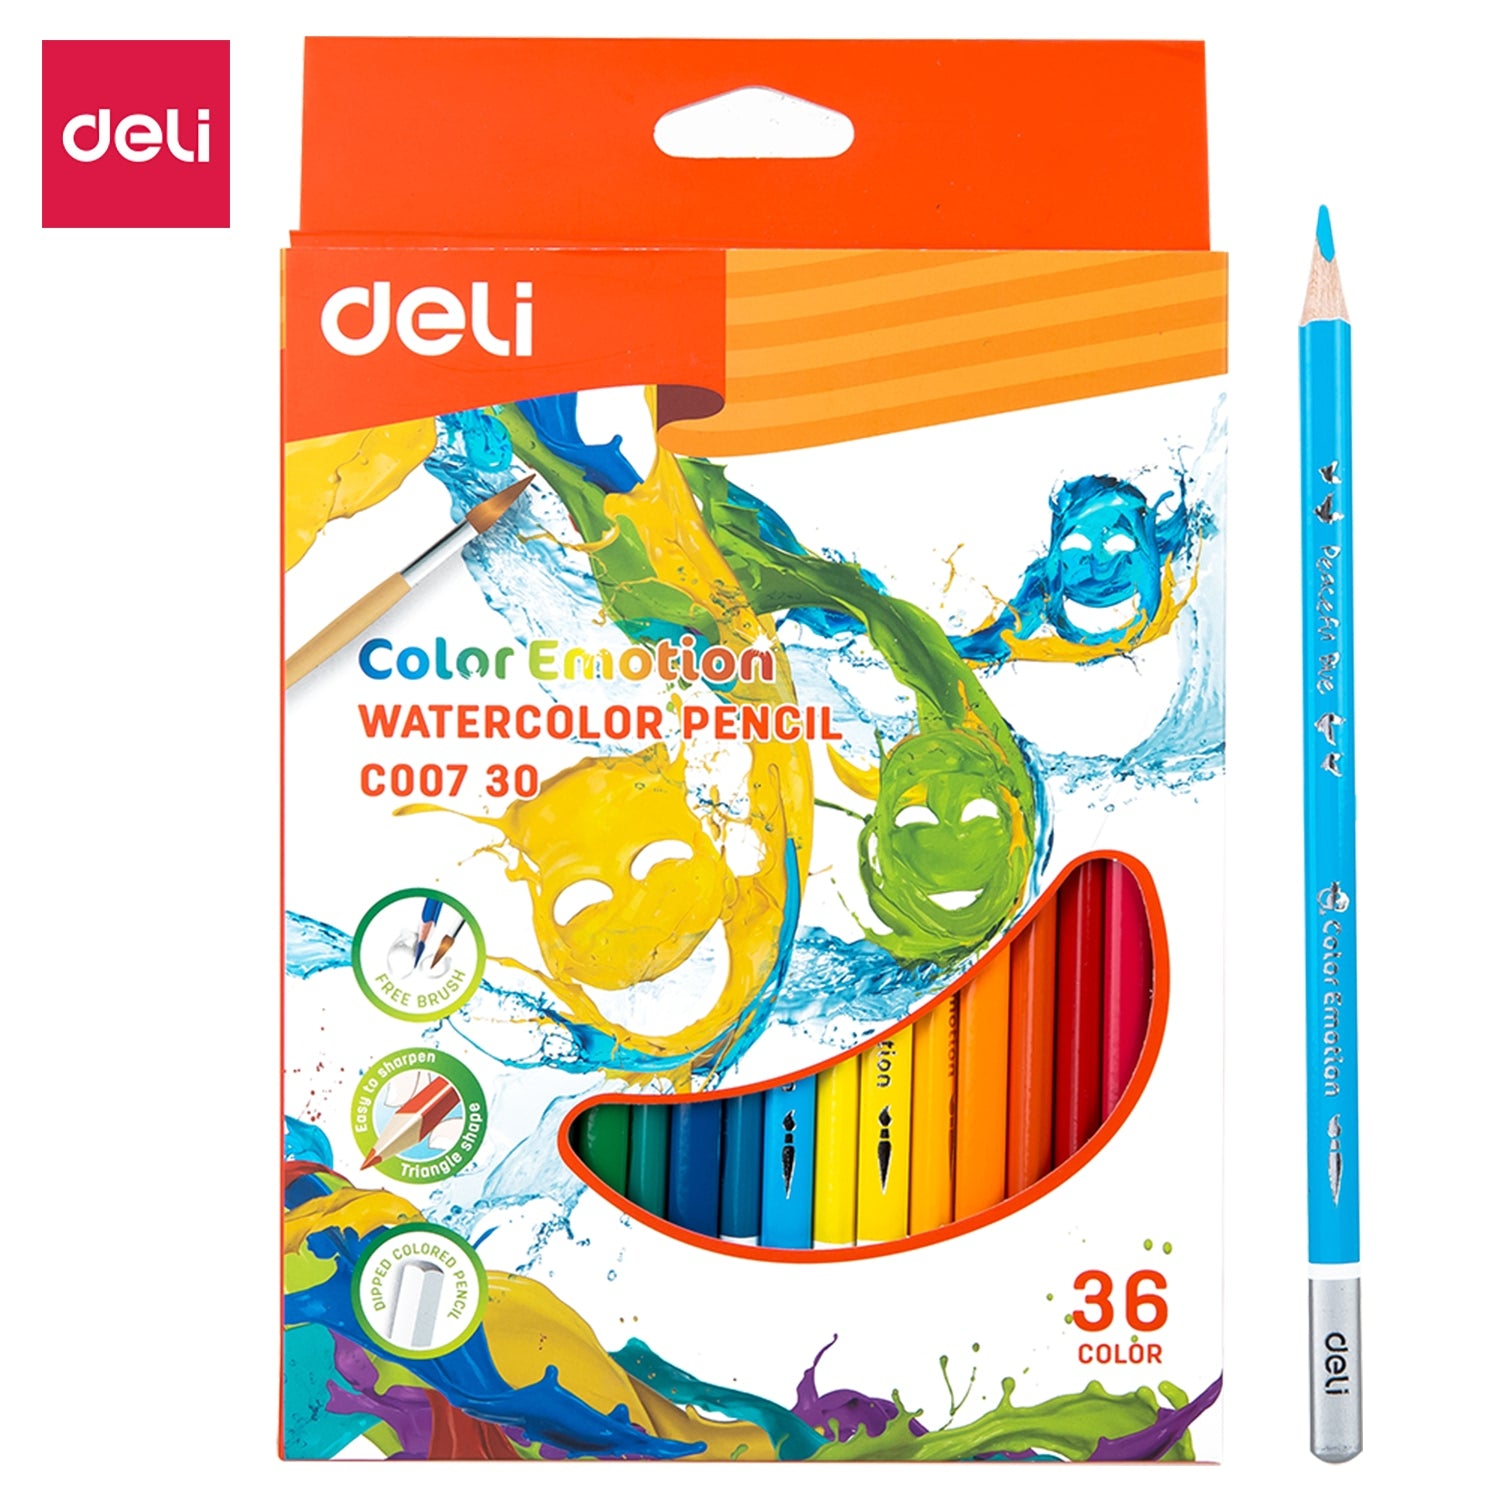 Deli C00730 Color Emotion Watercolor Pencil pack of 36 colors - multi color